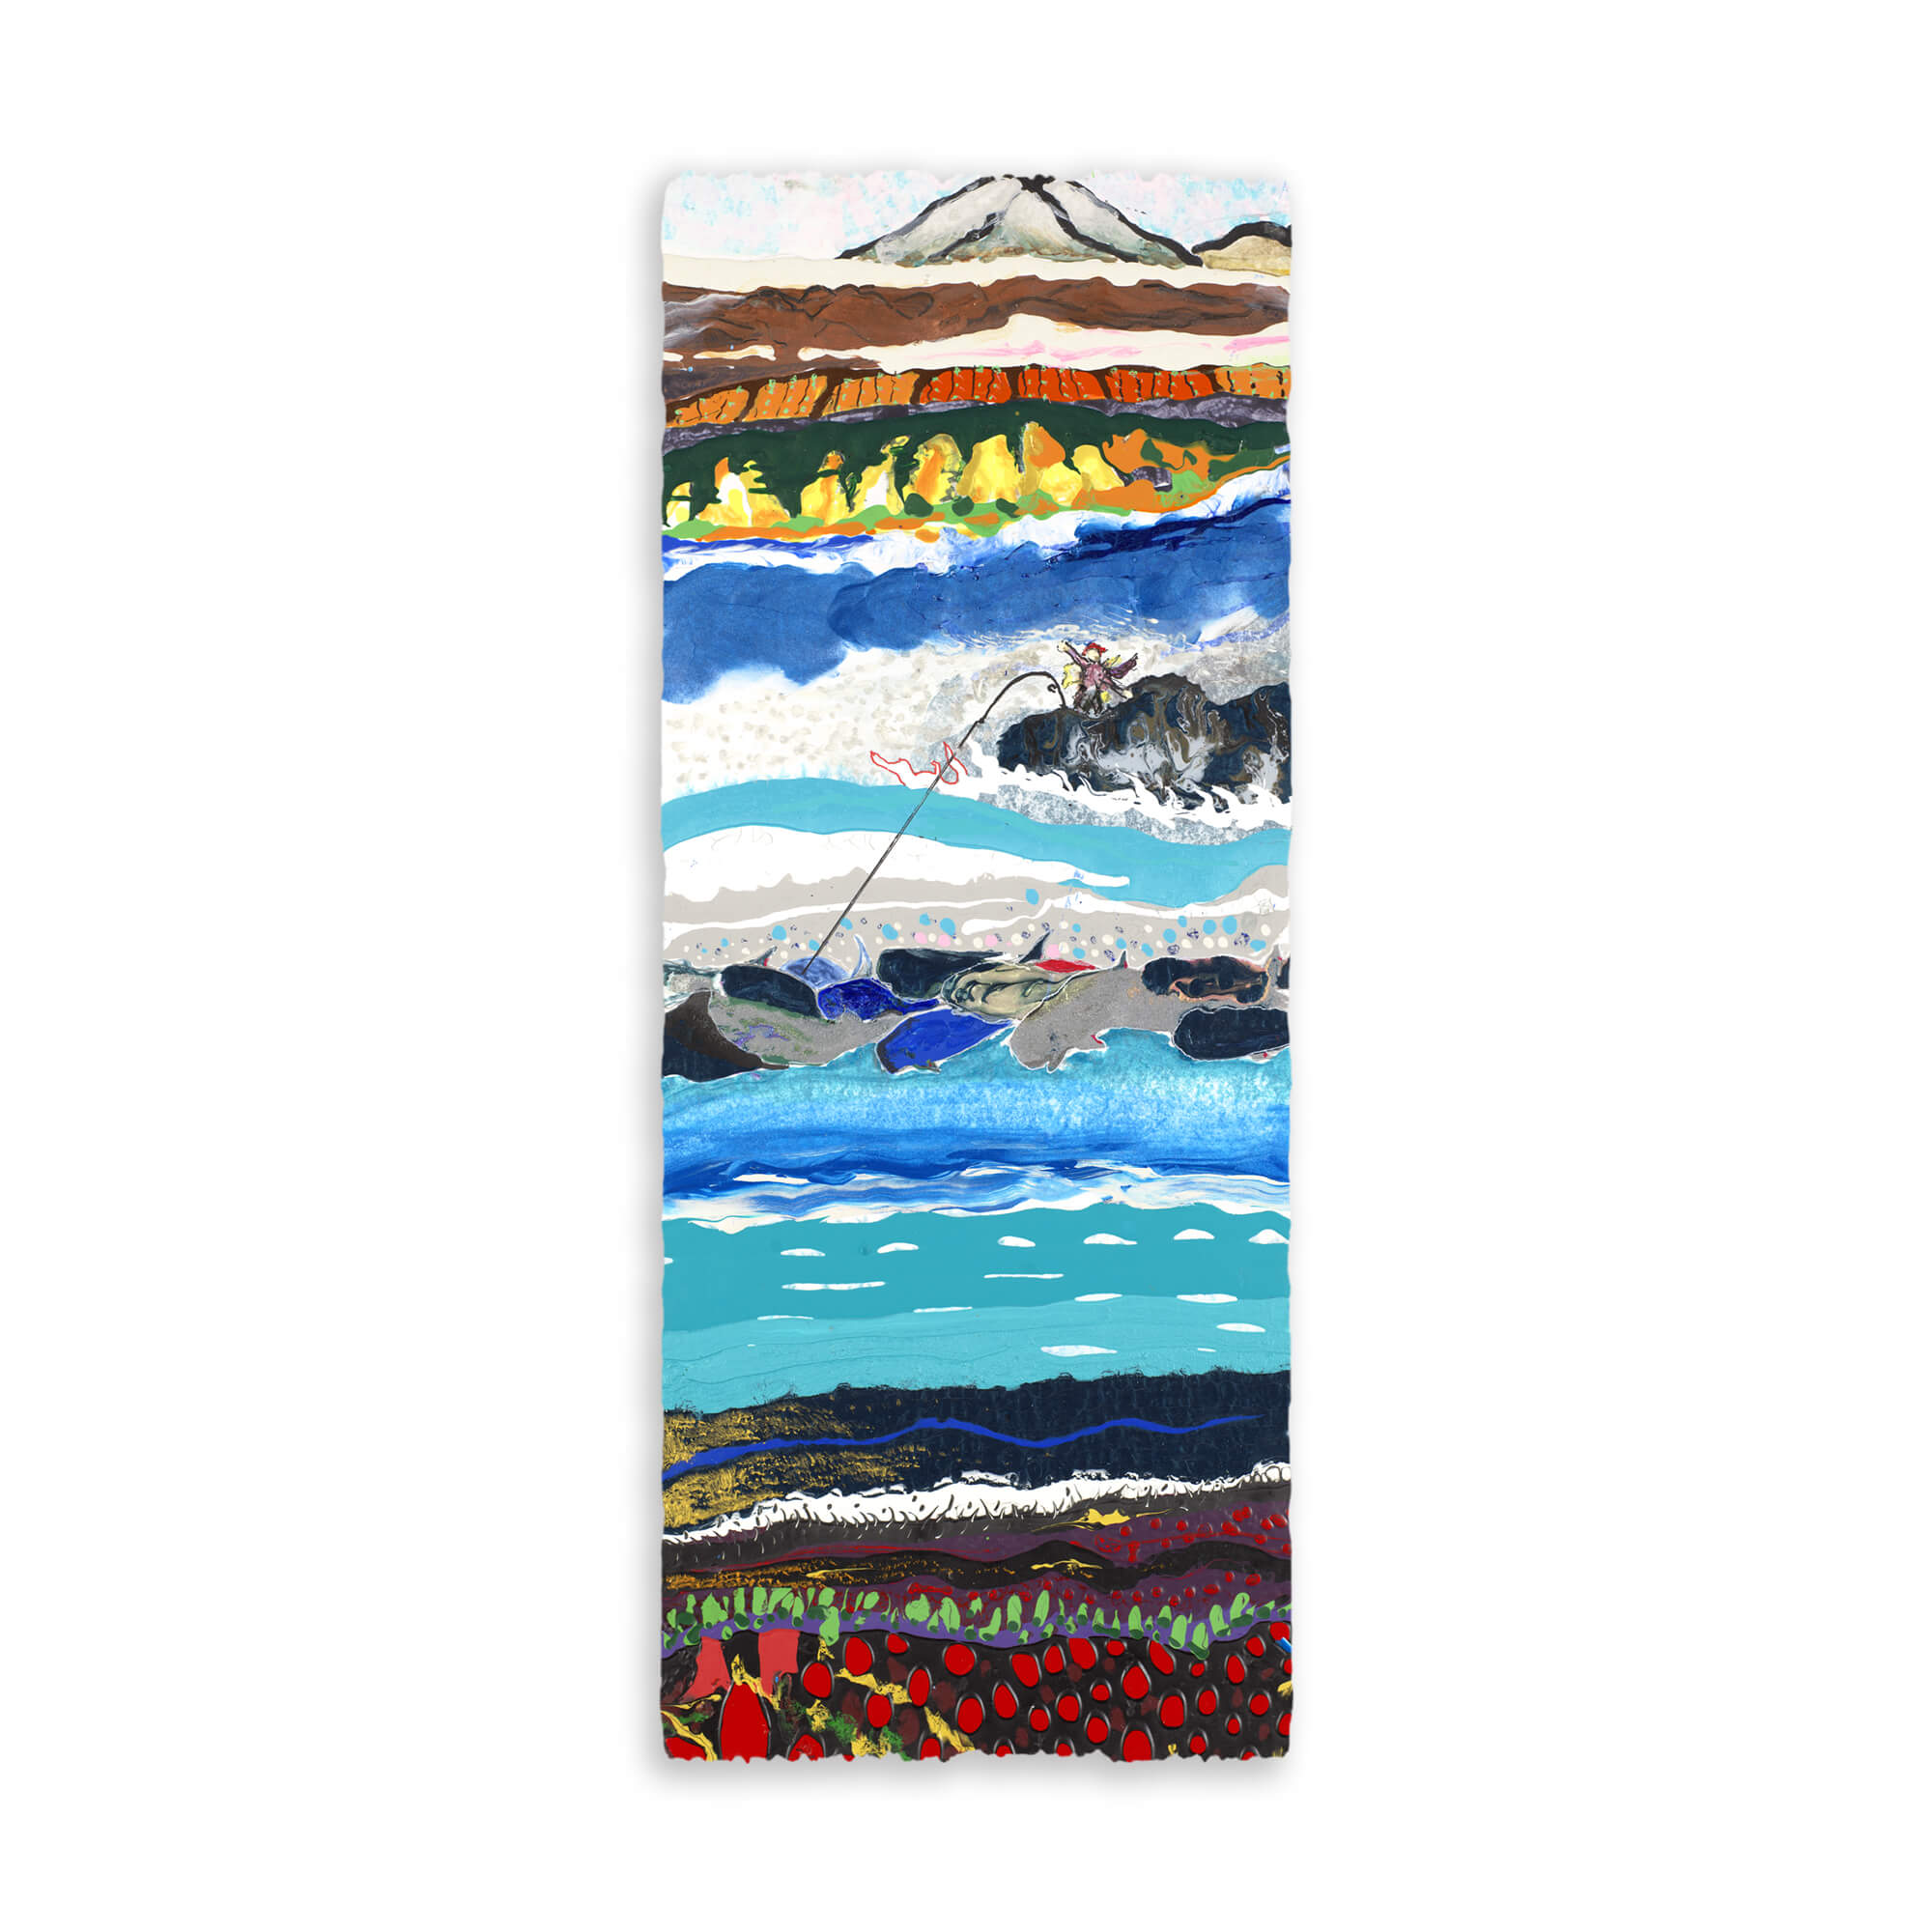 paper art print featuring the ocean and a high mountain by Hawaii artist Robert Hazzard